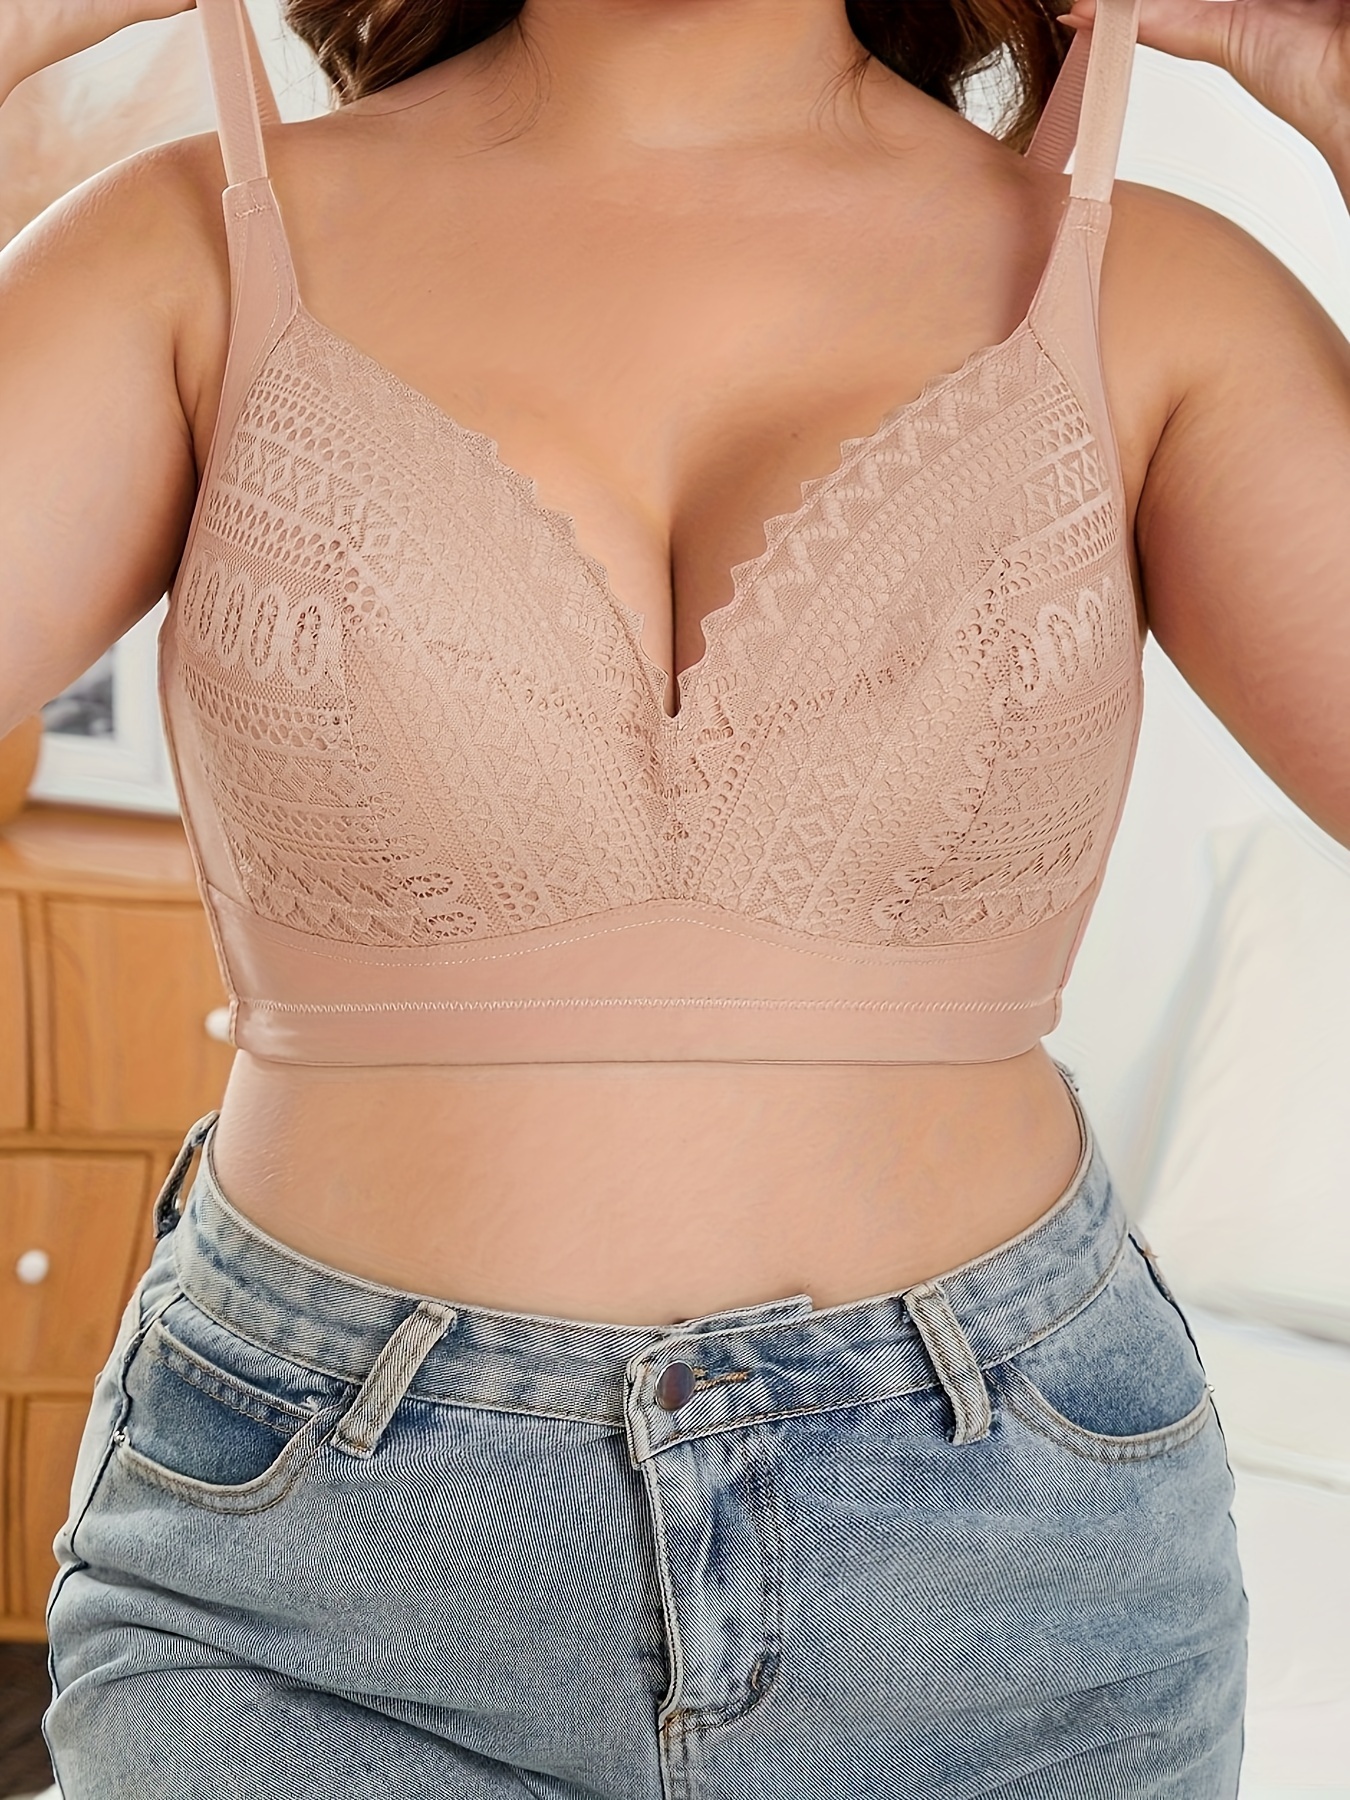 Cathalem Women's Push Up Bra Plus Size Full Coverage Lace